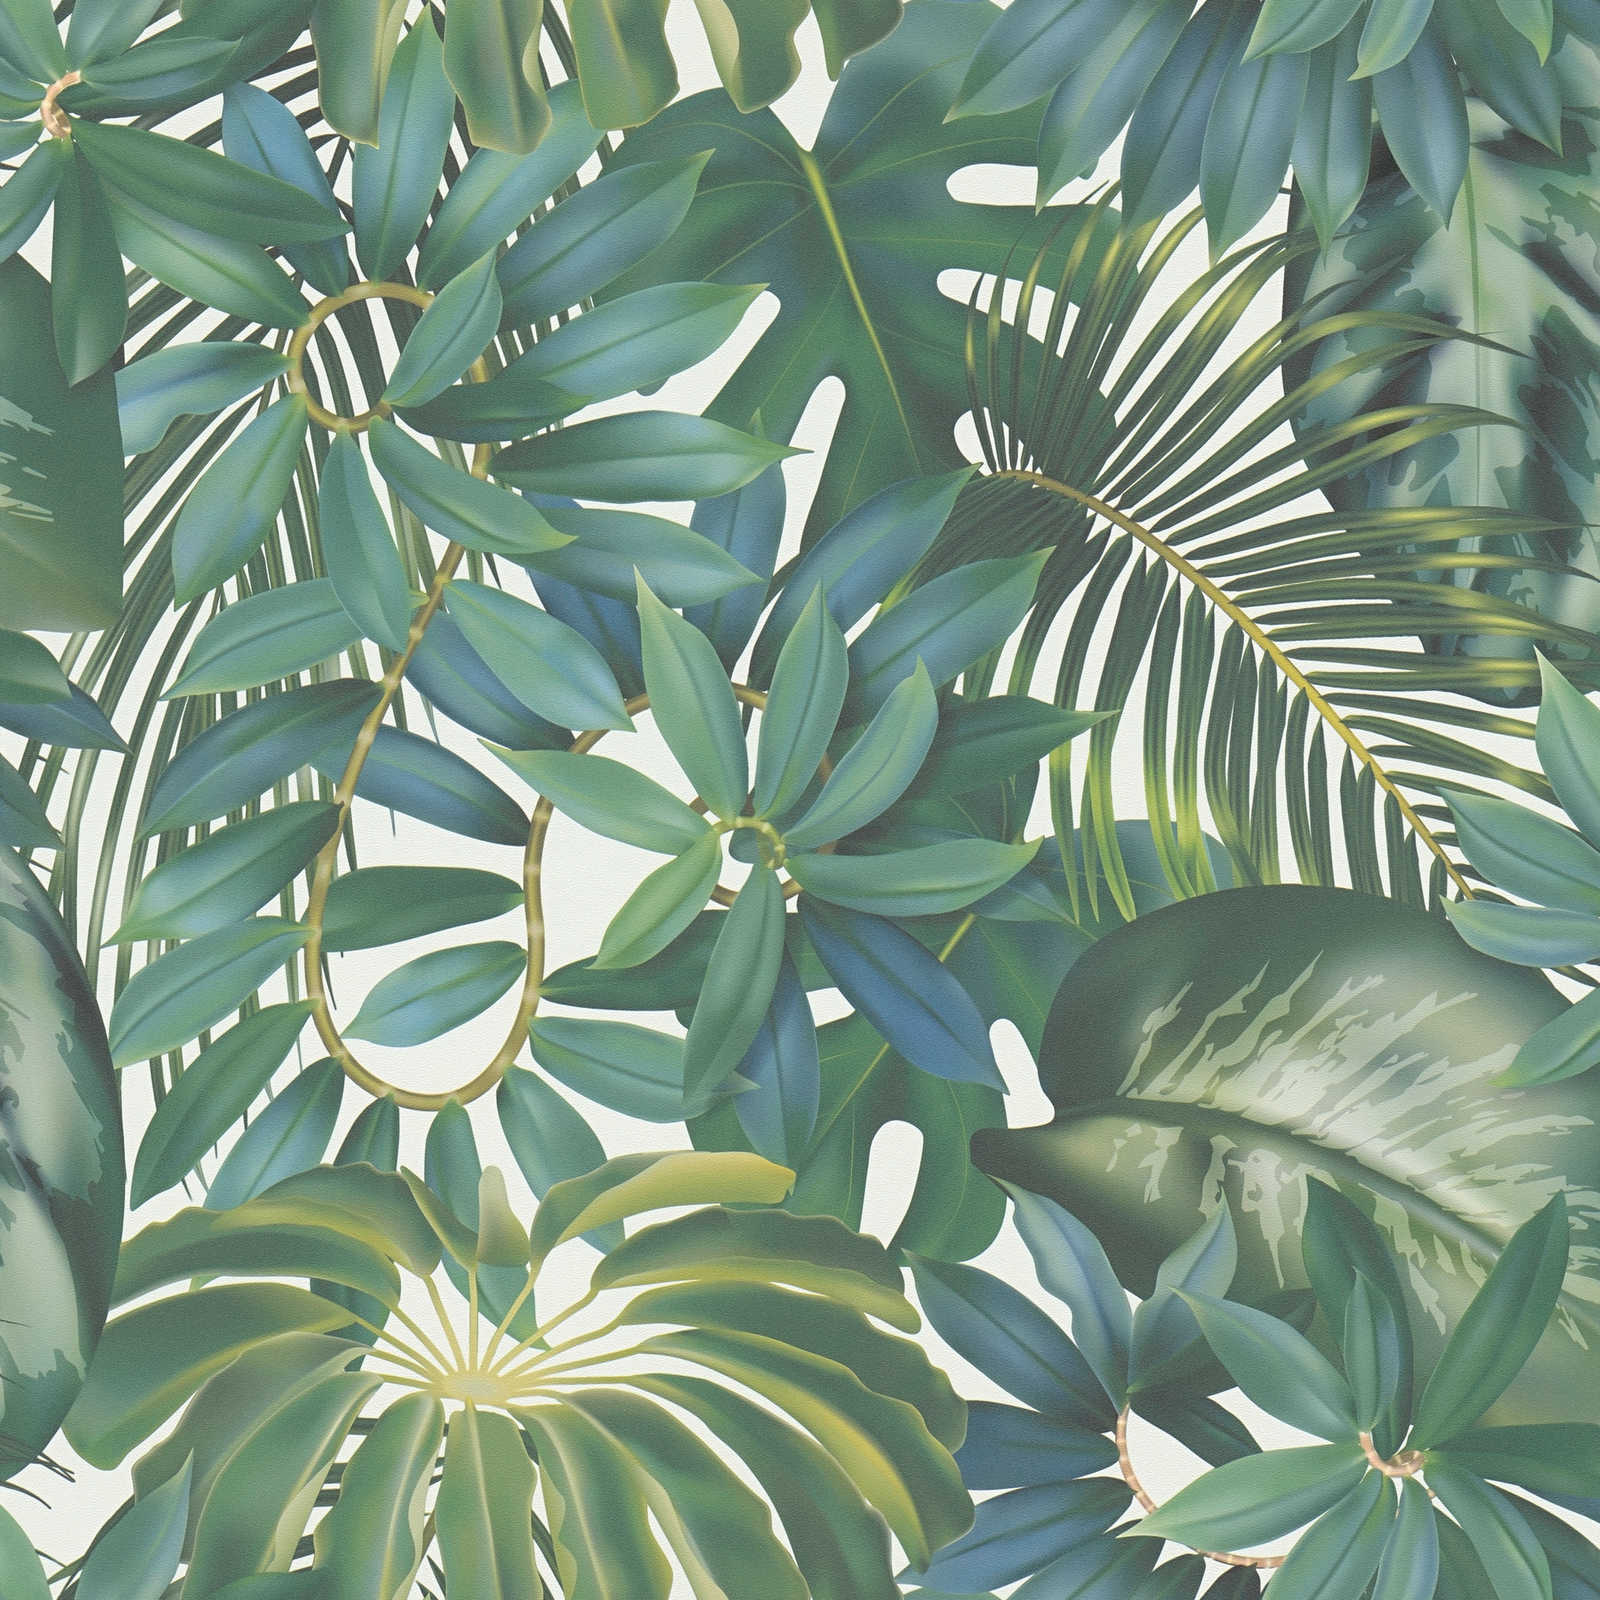 Leaves wallpaper jungle pattern - green, cream
